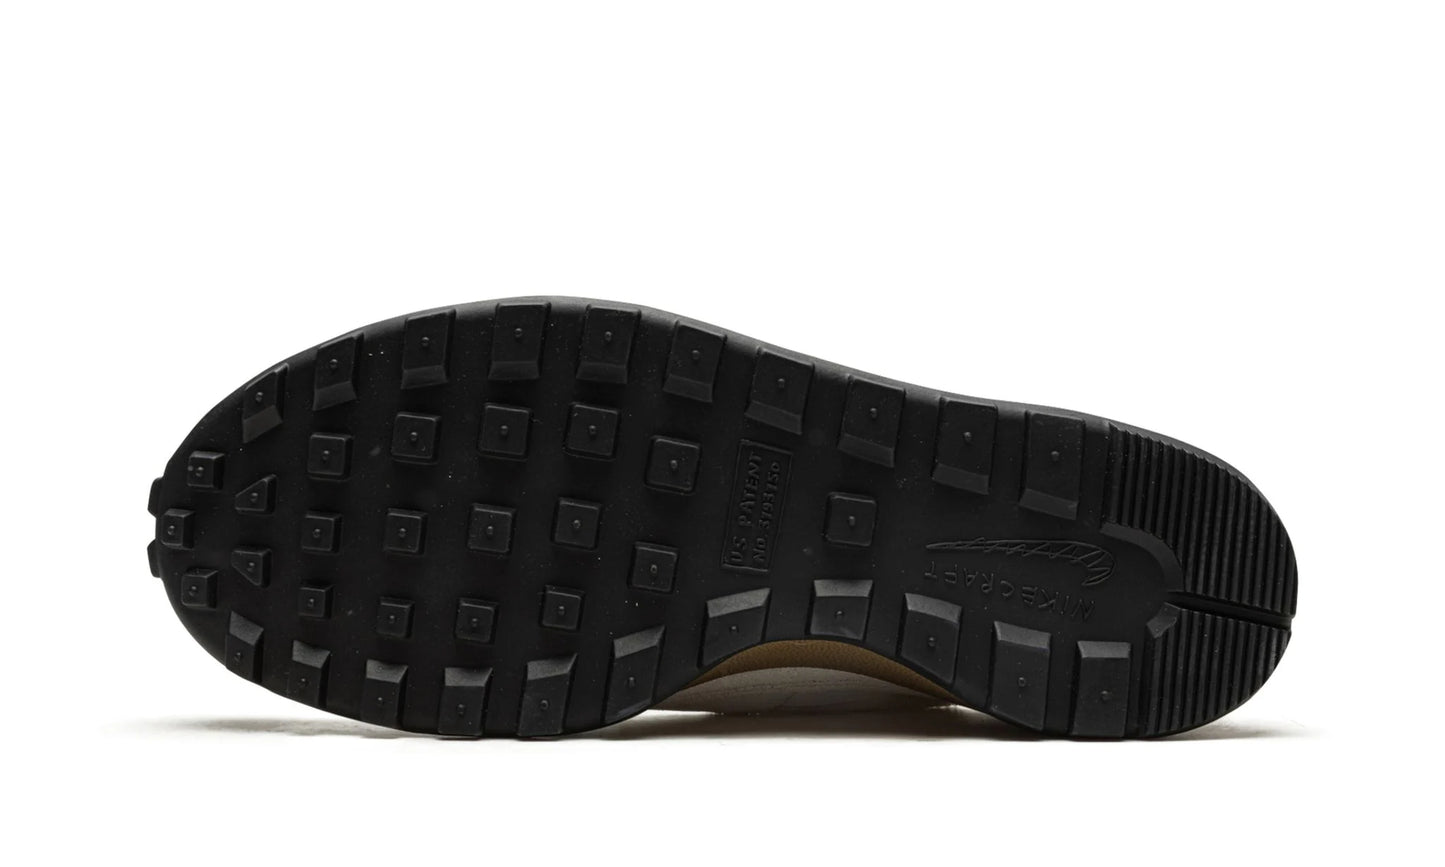 General Purpose Shoe 'Tom Sachs x NikeCraft'